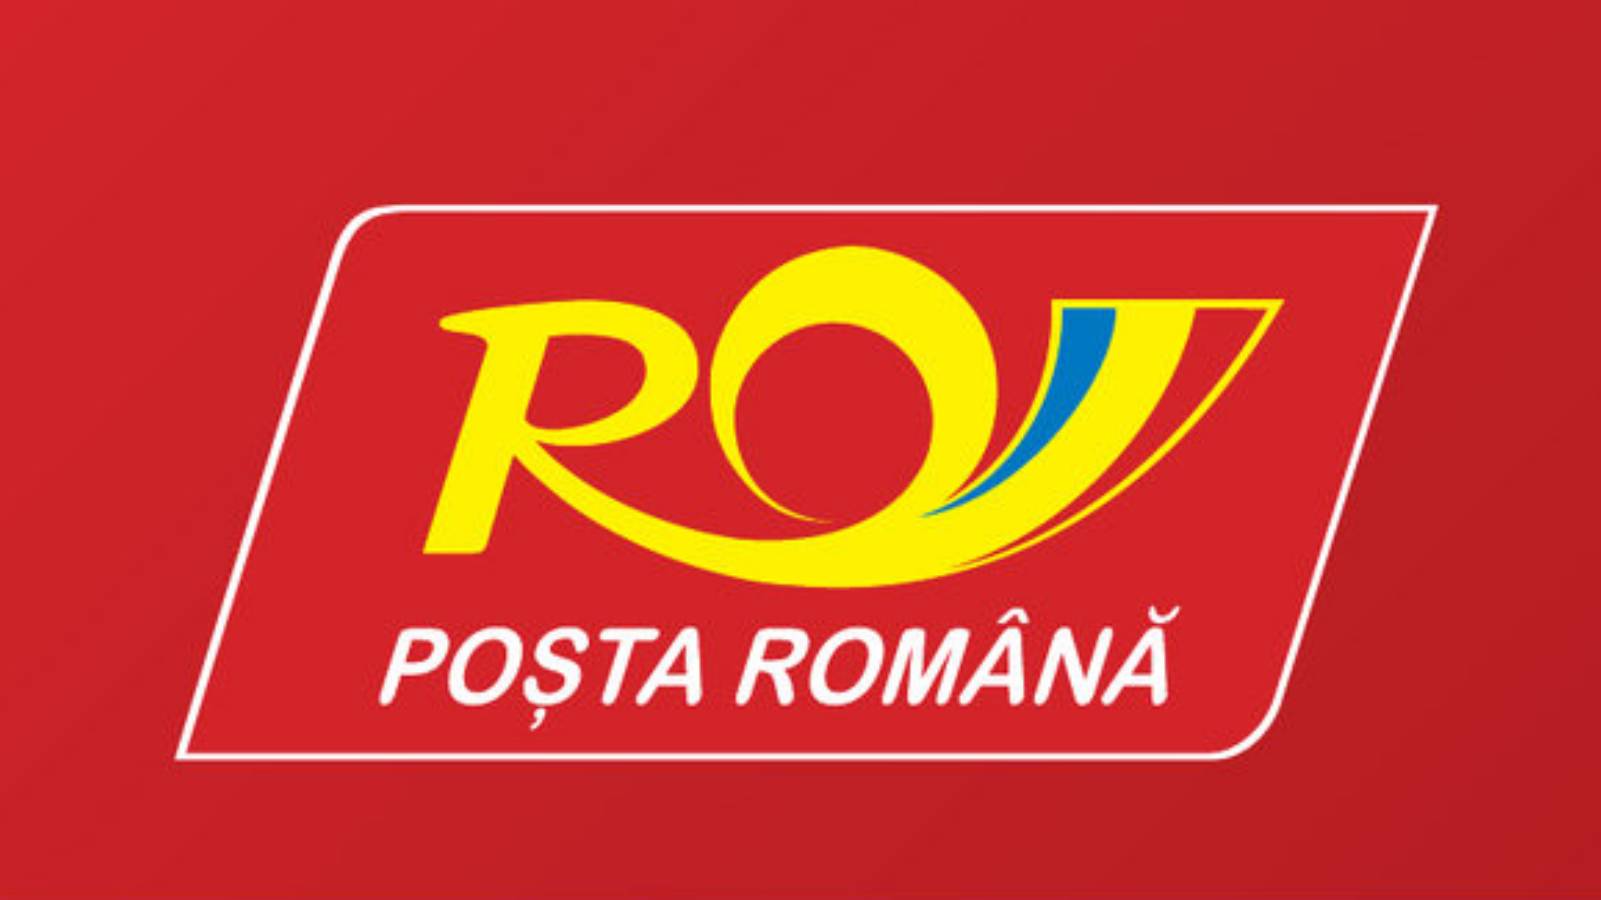 Roemeense post sms china